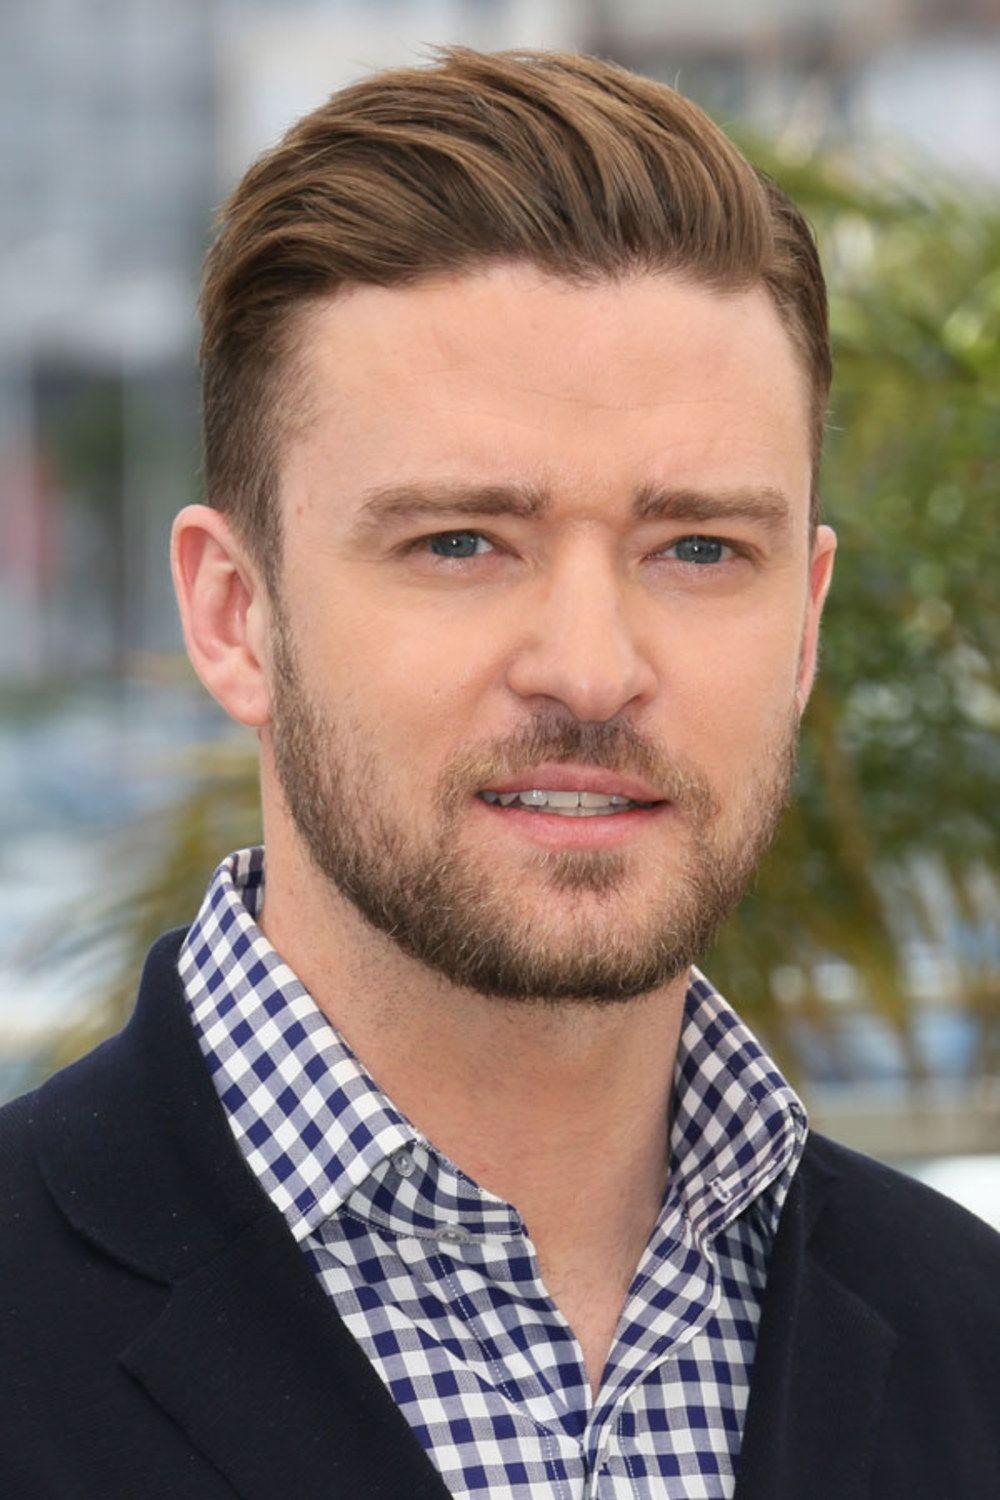 Justin Timberlake 2017 Wallpapers - Wallpaper Cave